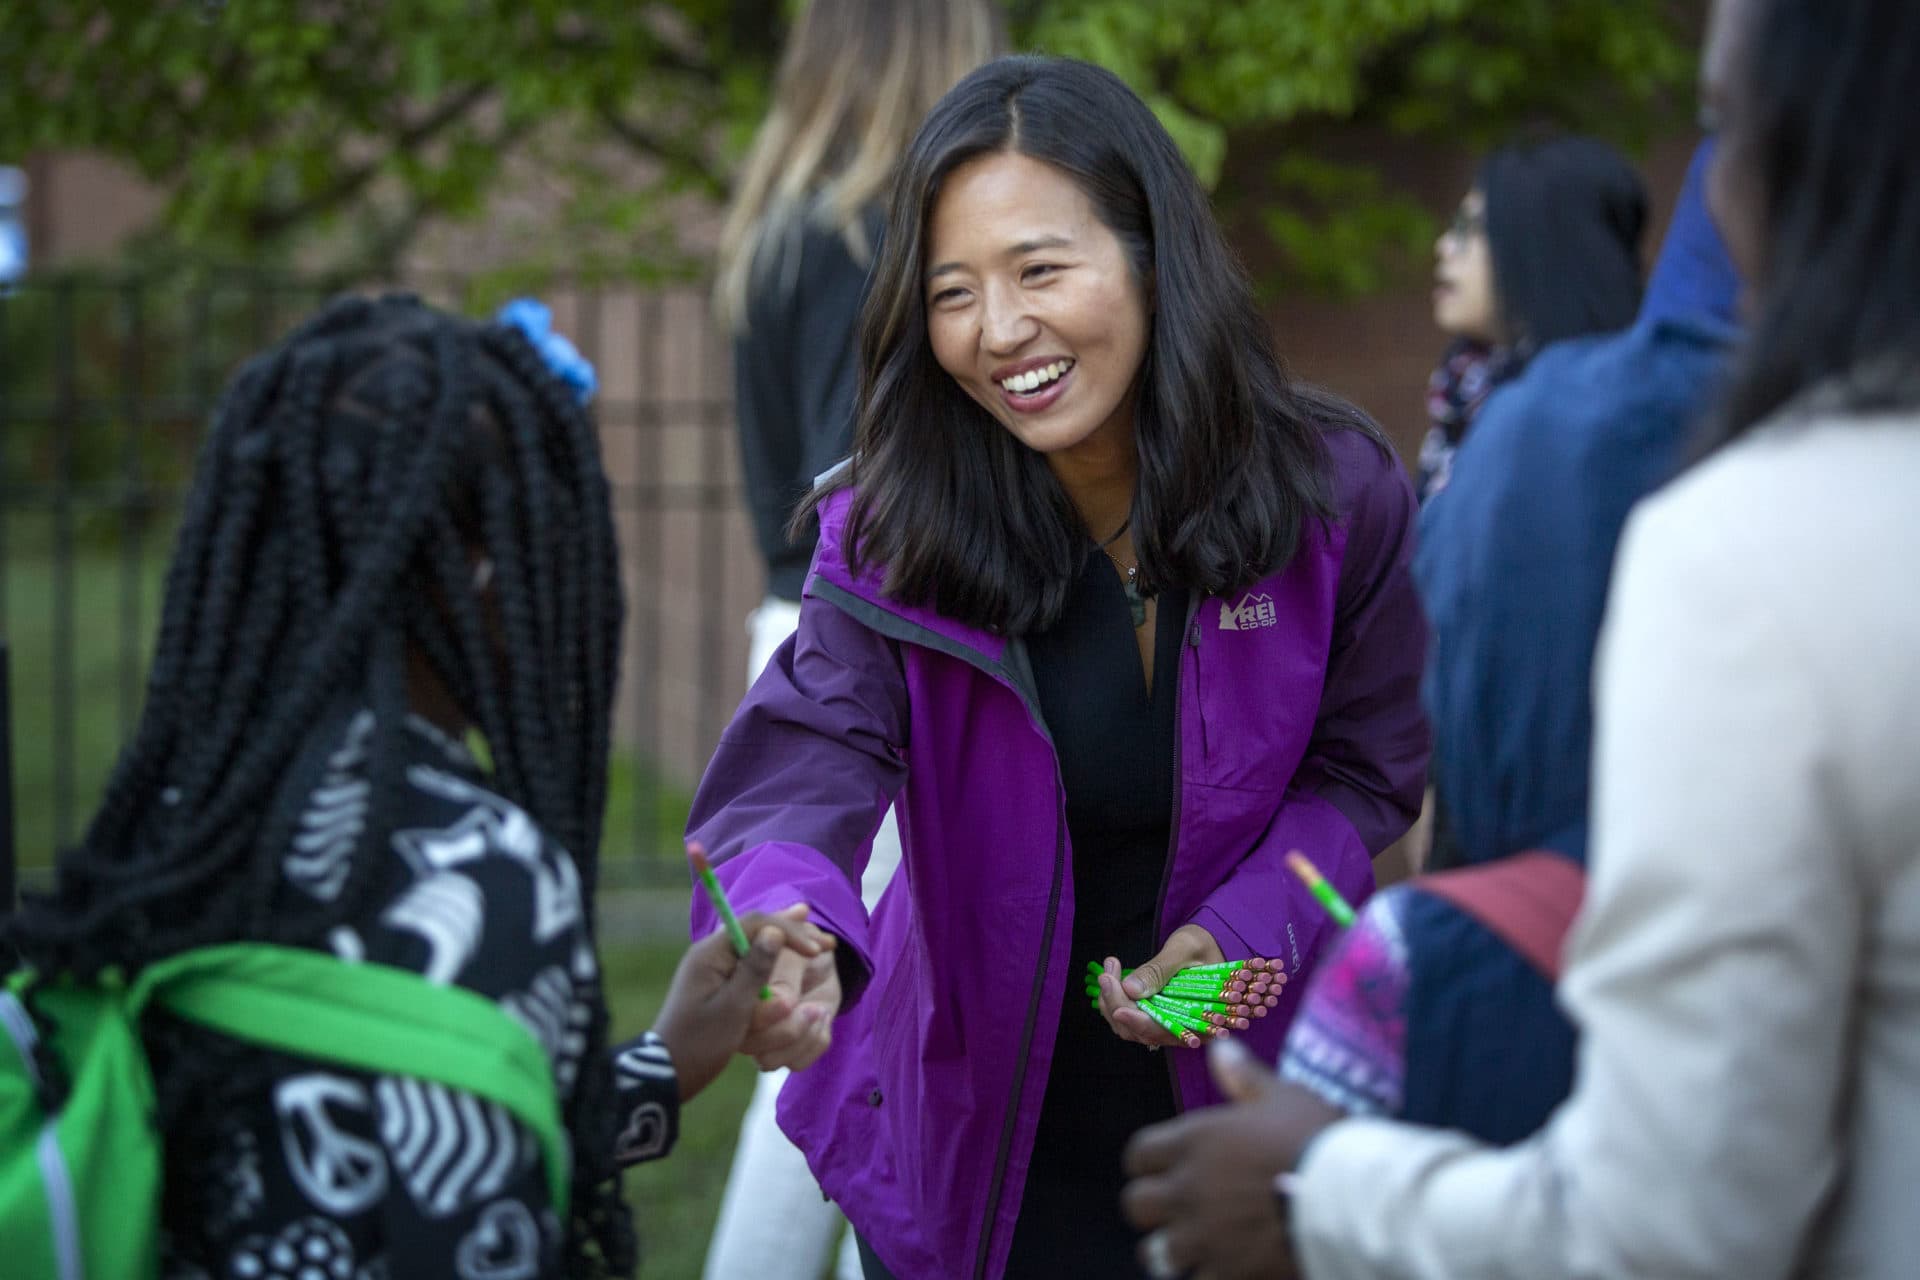 Boston Mayor Michelle Wu welcomes children arriving at Mattahunt Elementary School at the start of the new school year. (Robin Lubbock/WBUR)